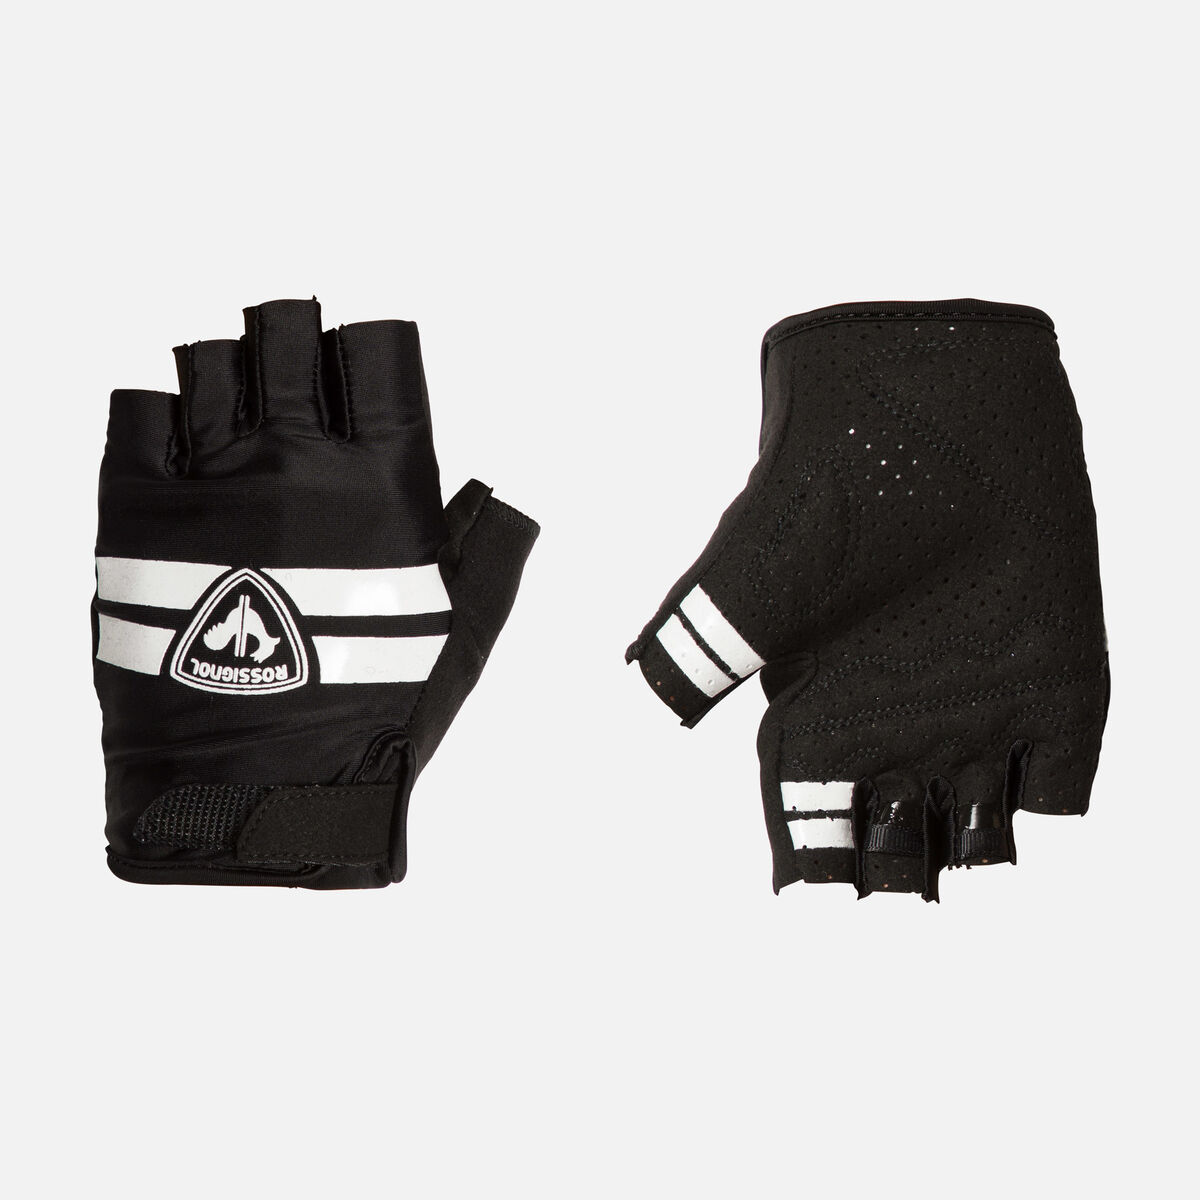 Rossignol Women's stretch cycling gloves Black